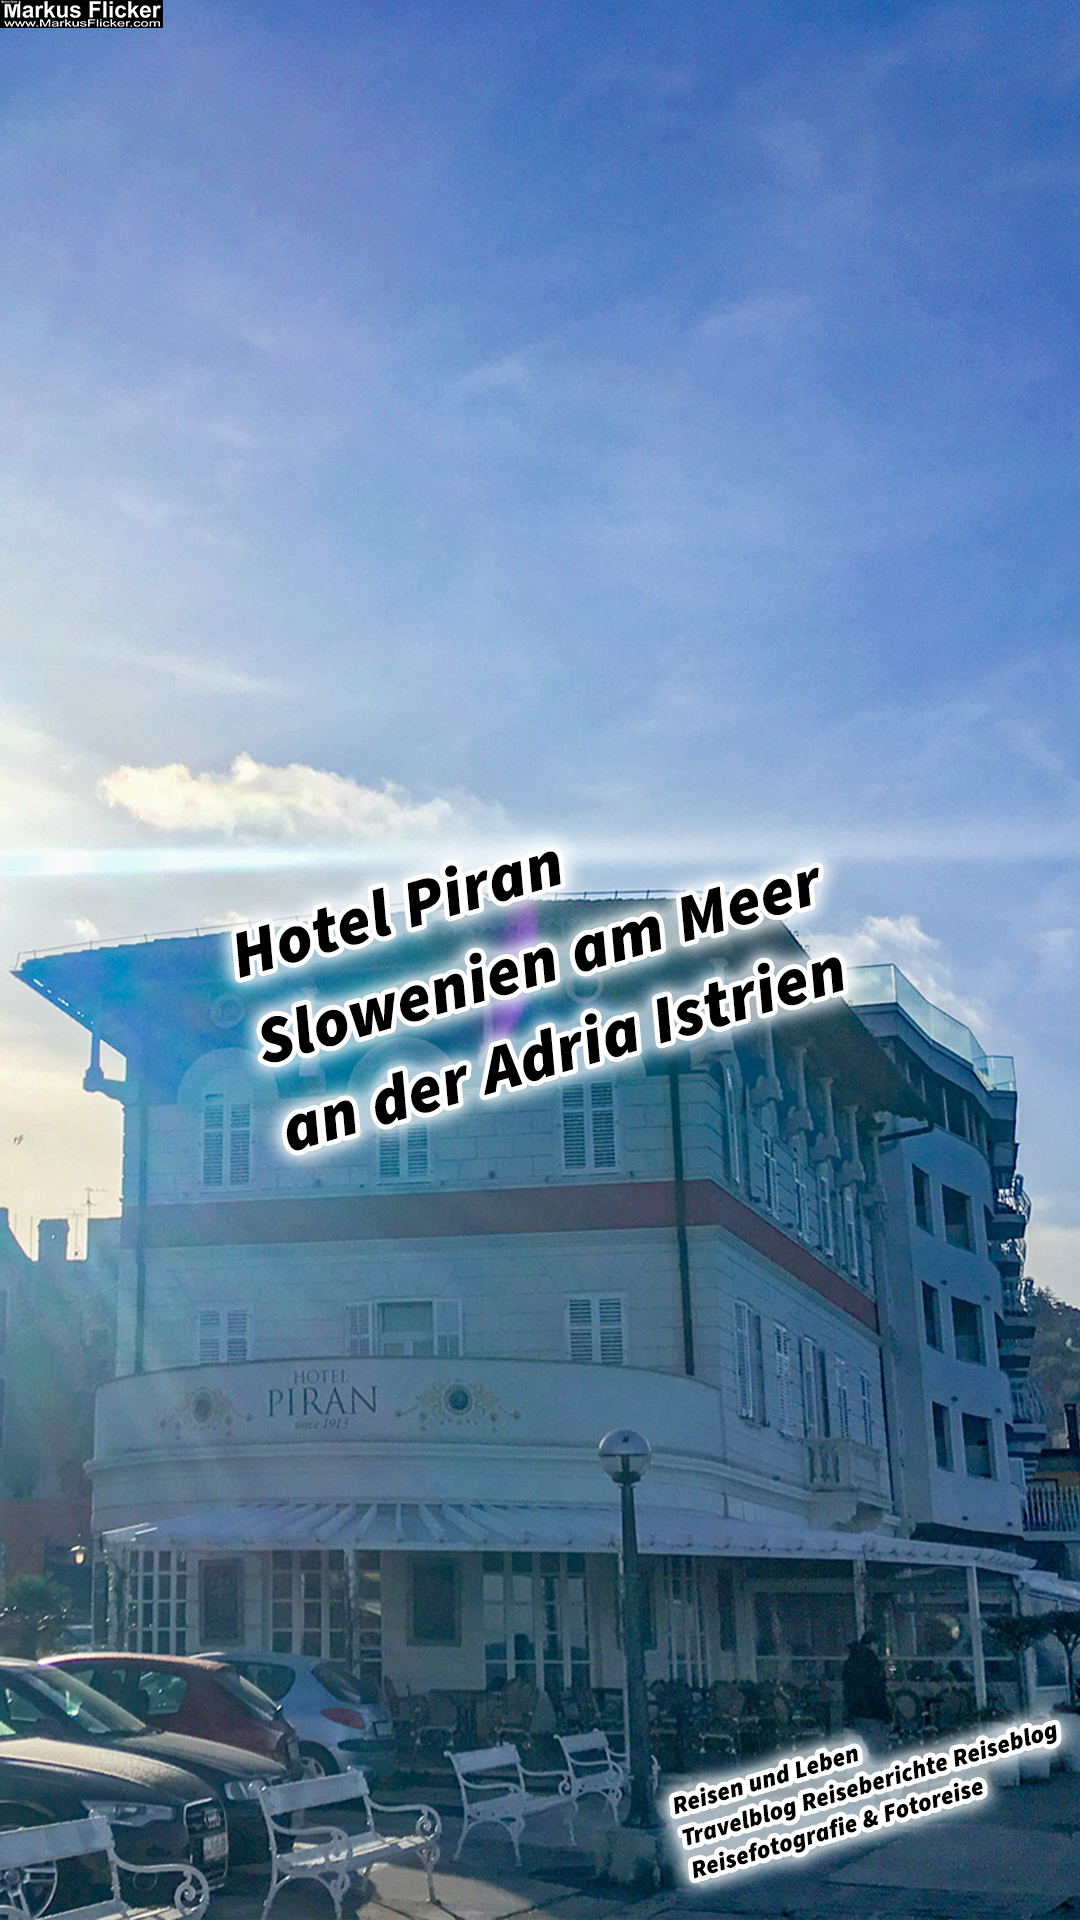 Hotel Piran in Slowenien am Meer an der Adria Istrien #FeelSlovenia #piran #ifeelsLOVEnia #myway